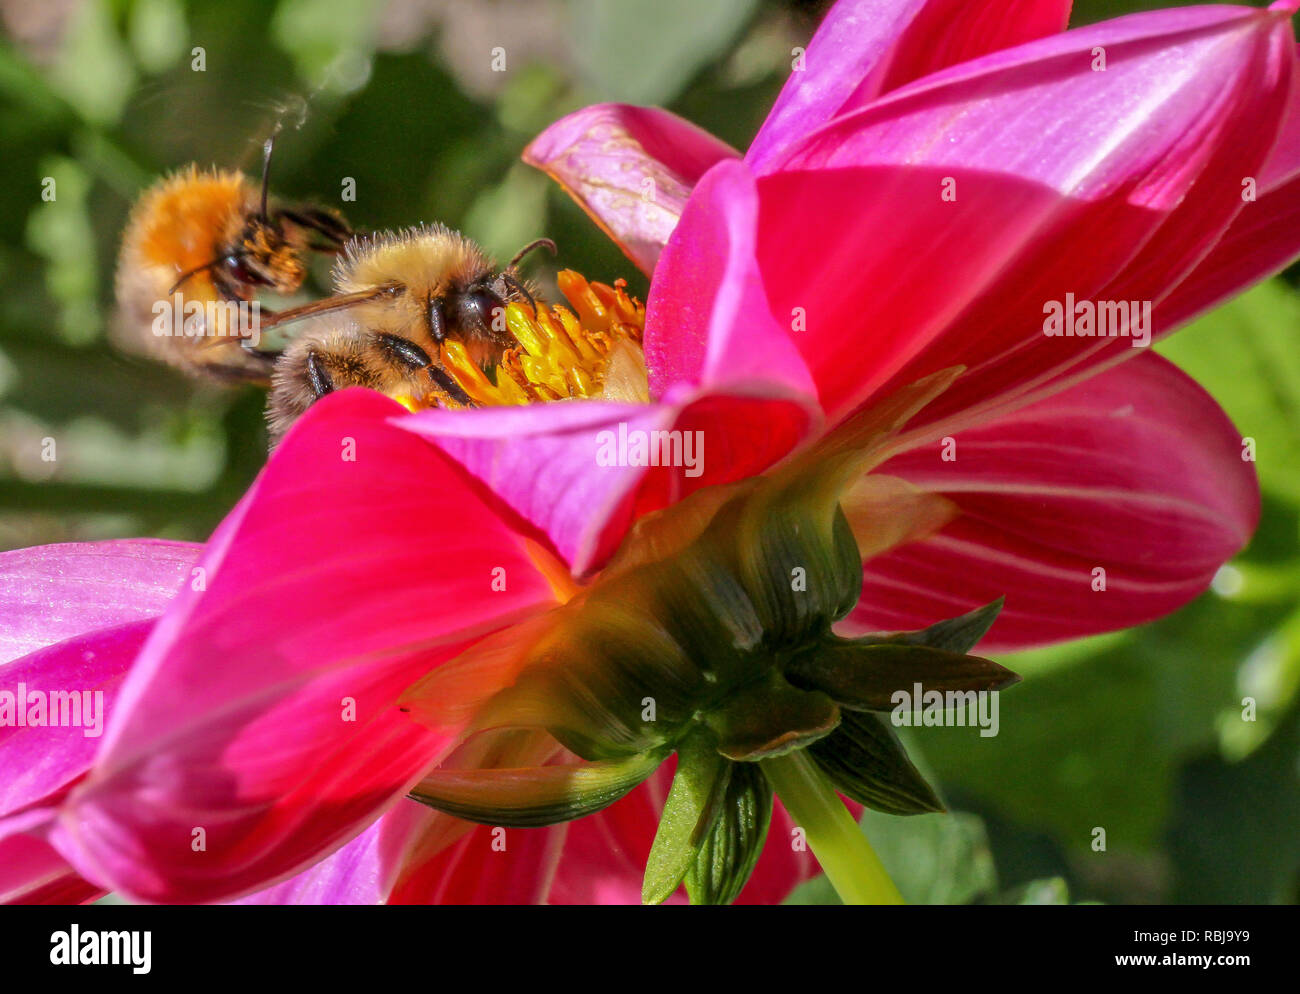 Two bees gathering pollen from a garden dahlia. Stock Photo